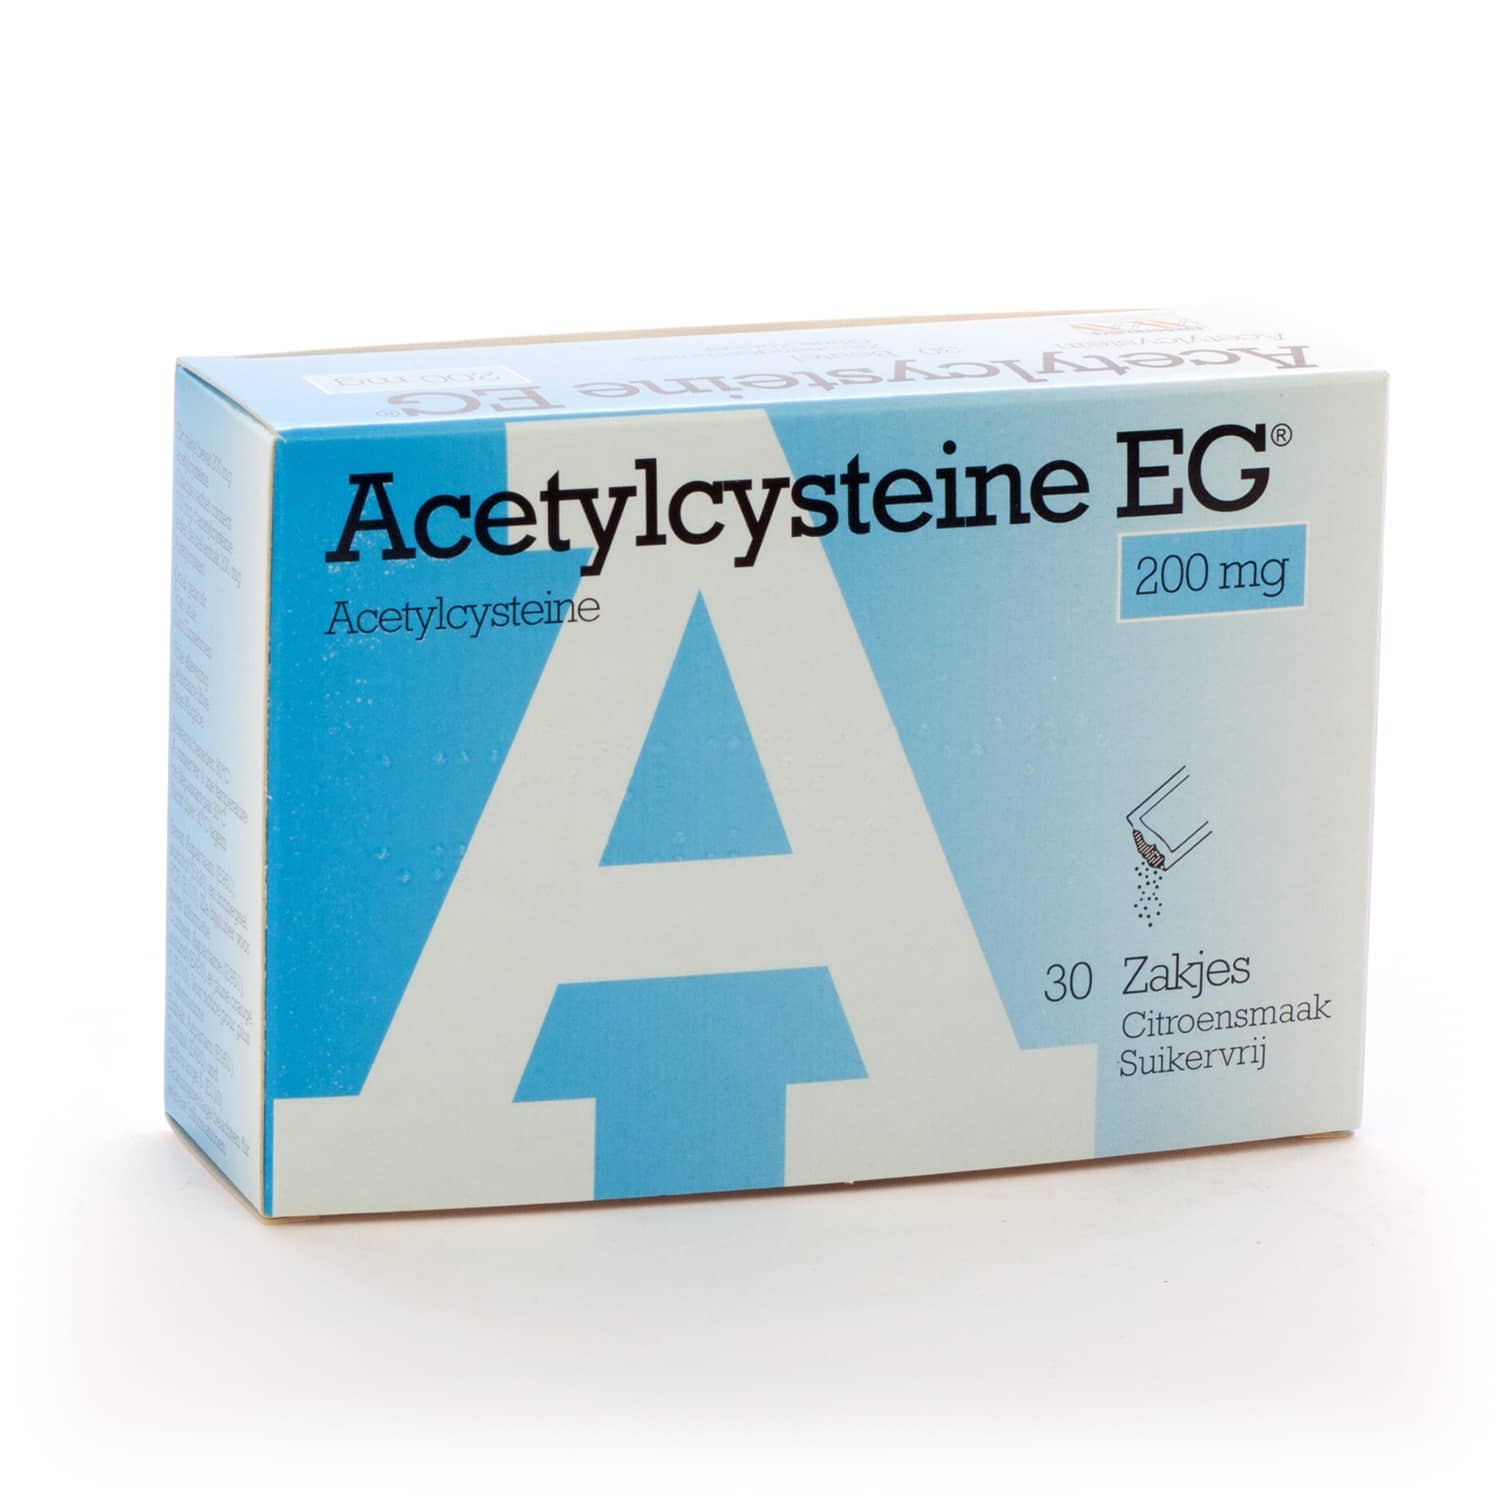 Acetylcysteine EG 200 mg